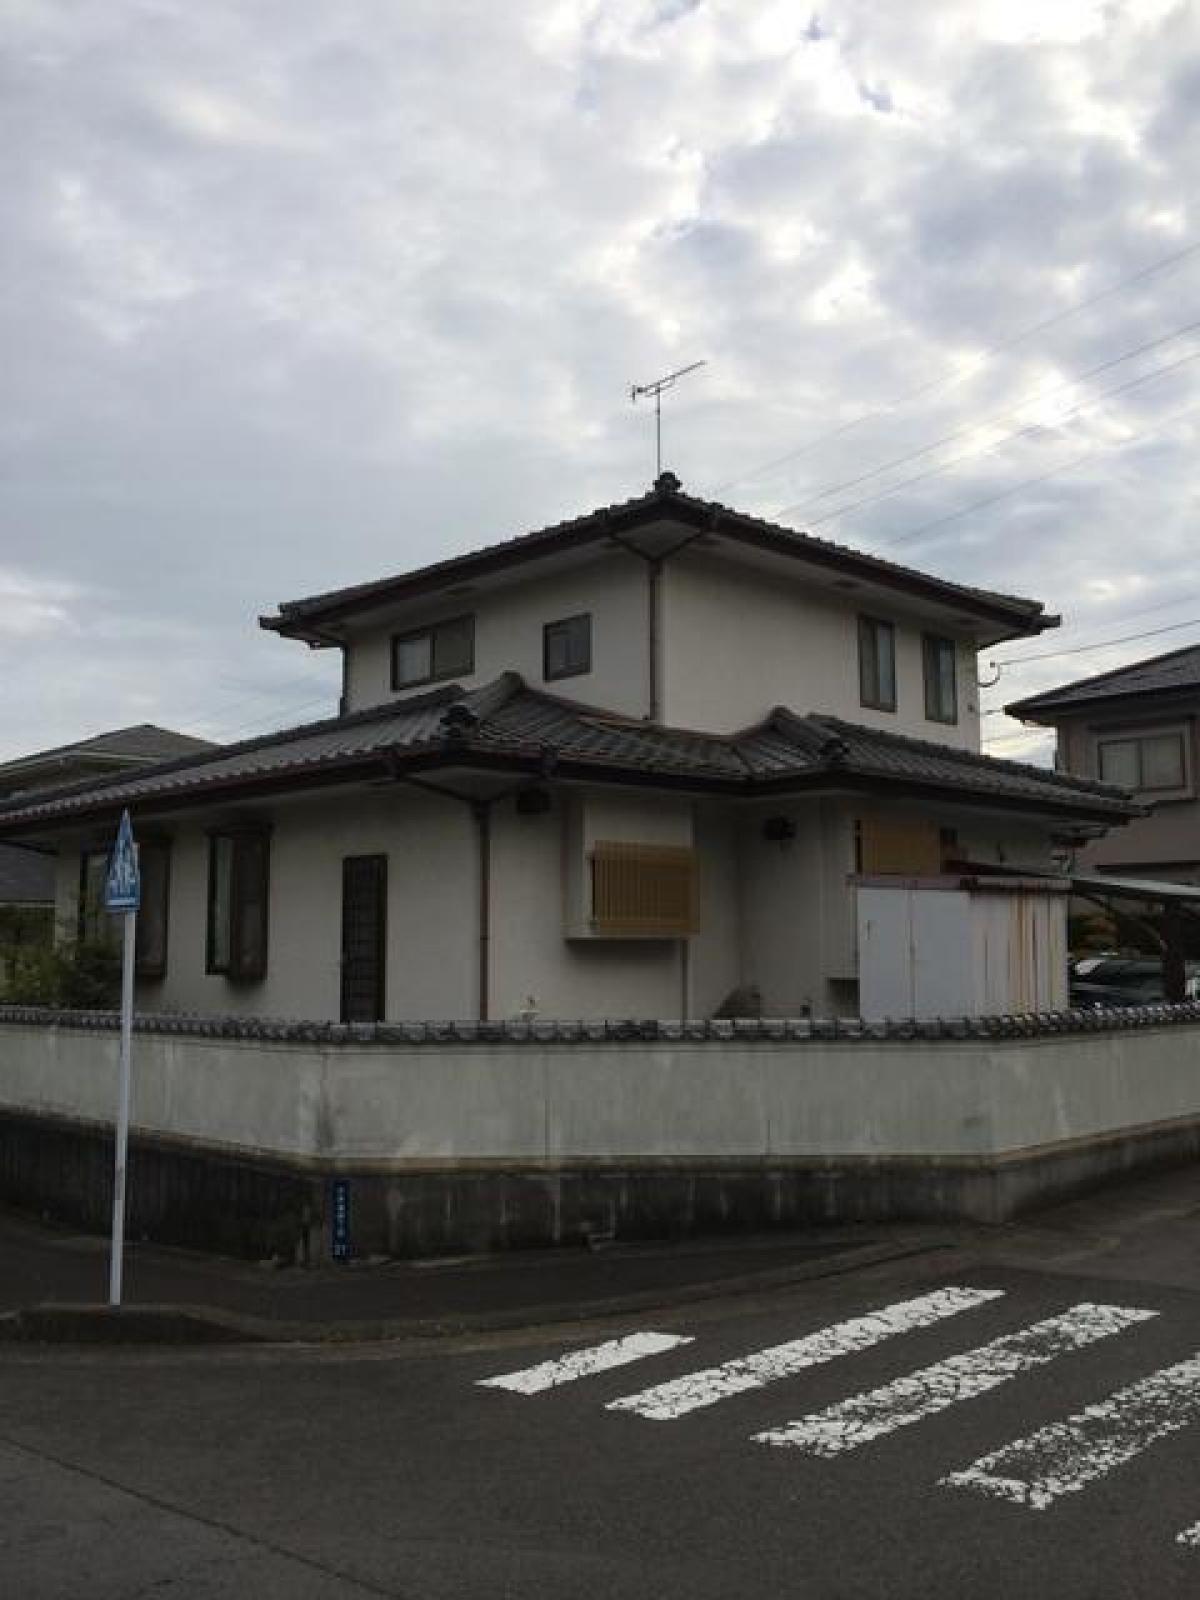 Picture of Home For Sale in Nagasaki Shi, Nagasaki, Japan